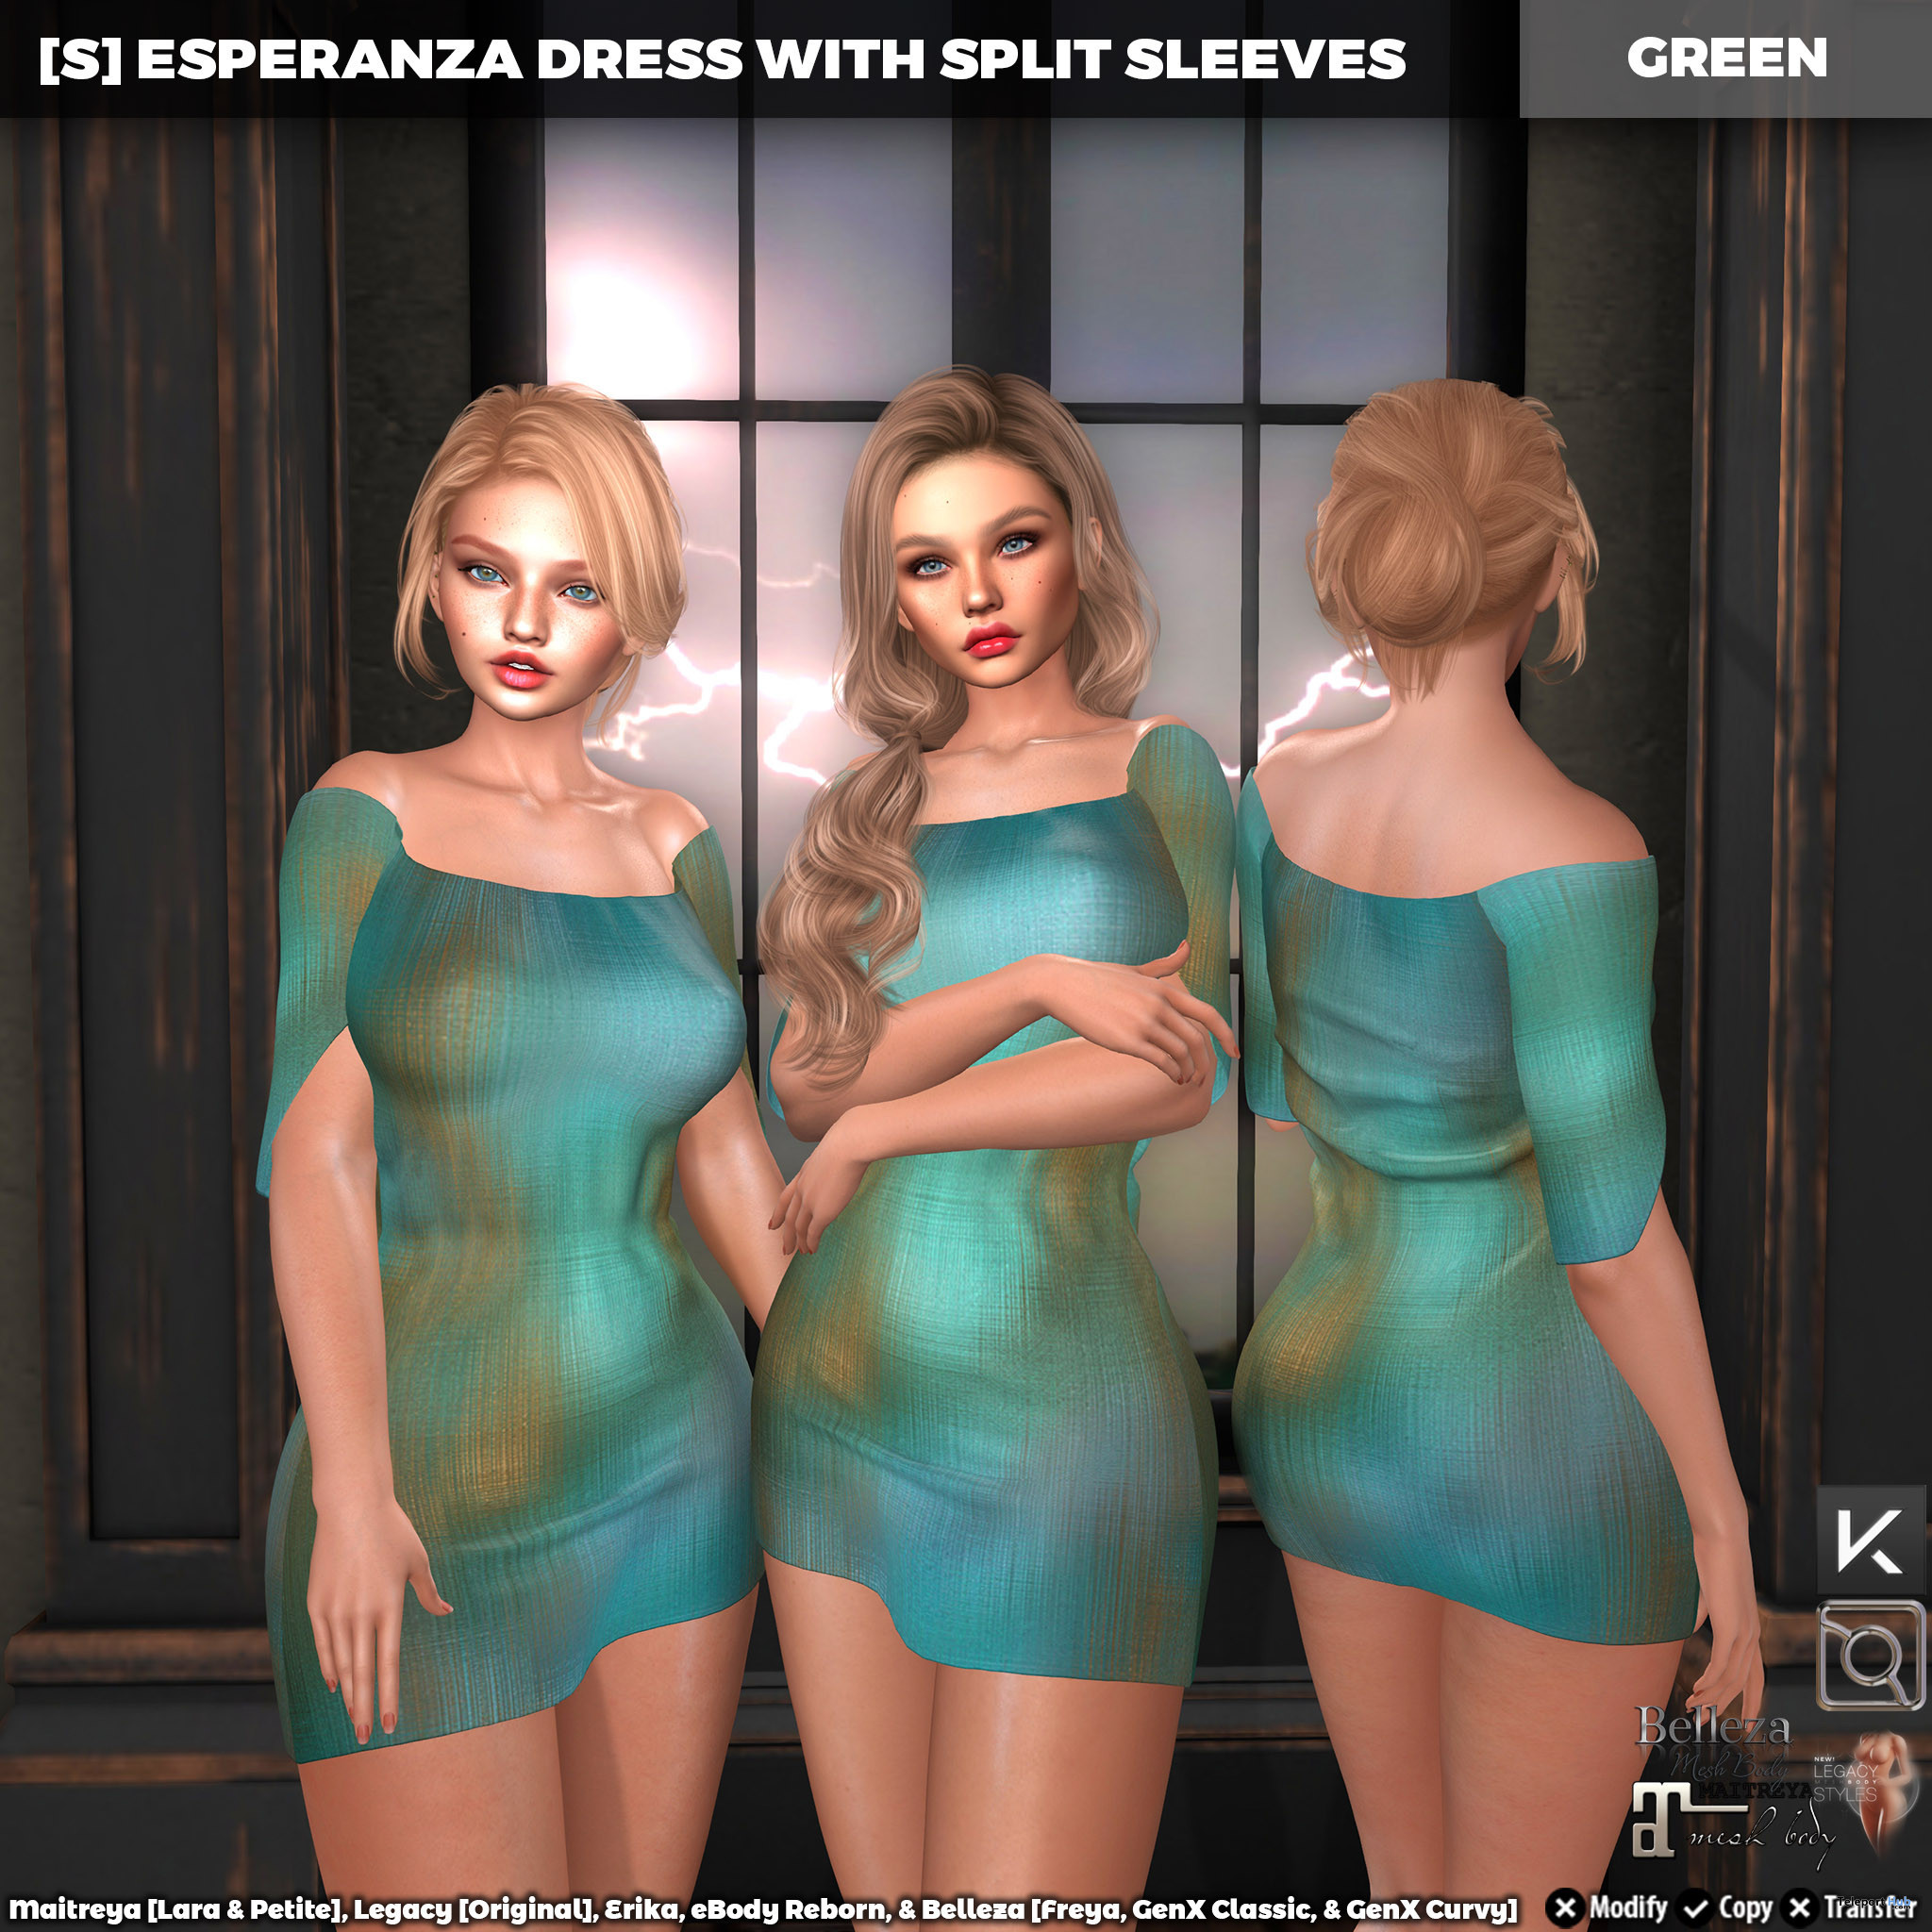 New Release: [S] Esperanza Dress With Split Sleeves by [satus Inc] - Teleport Hub - teleporthub.com